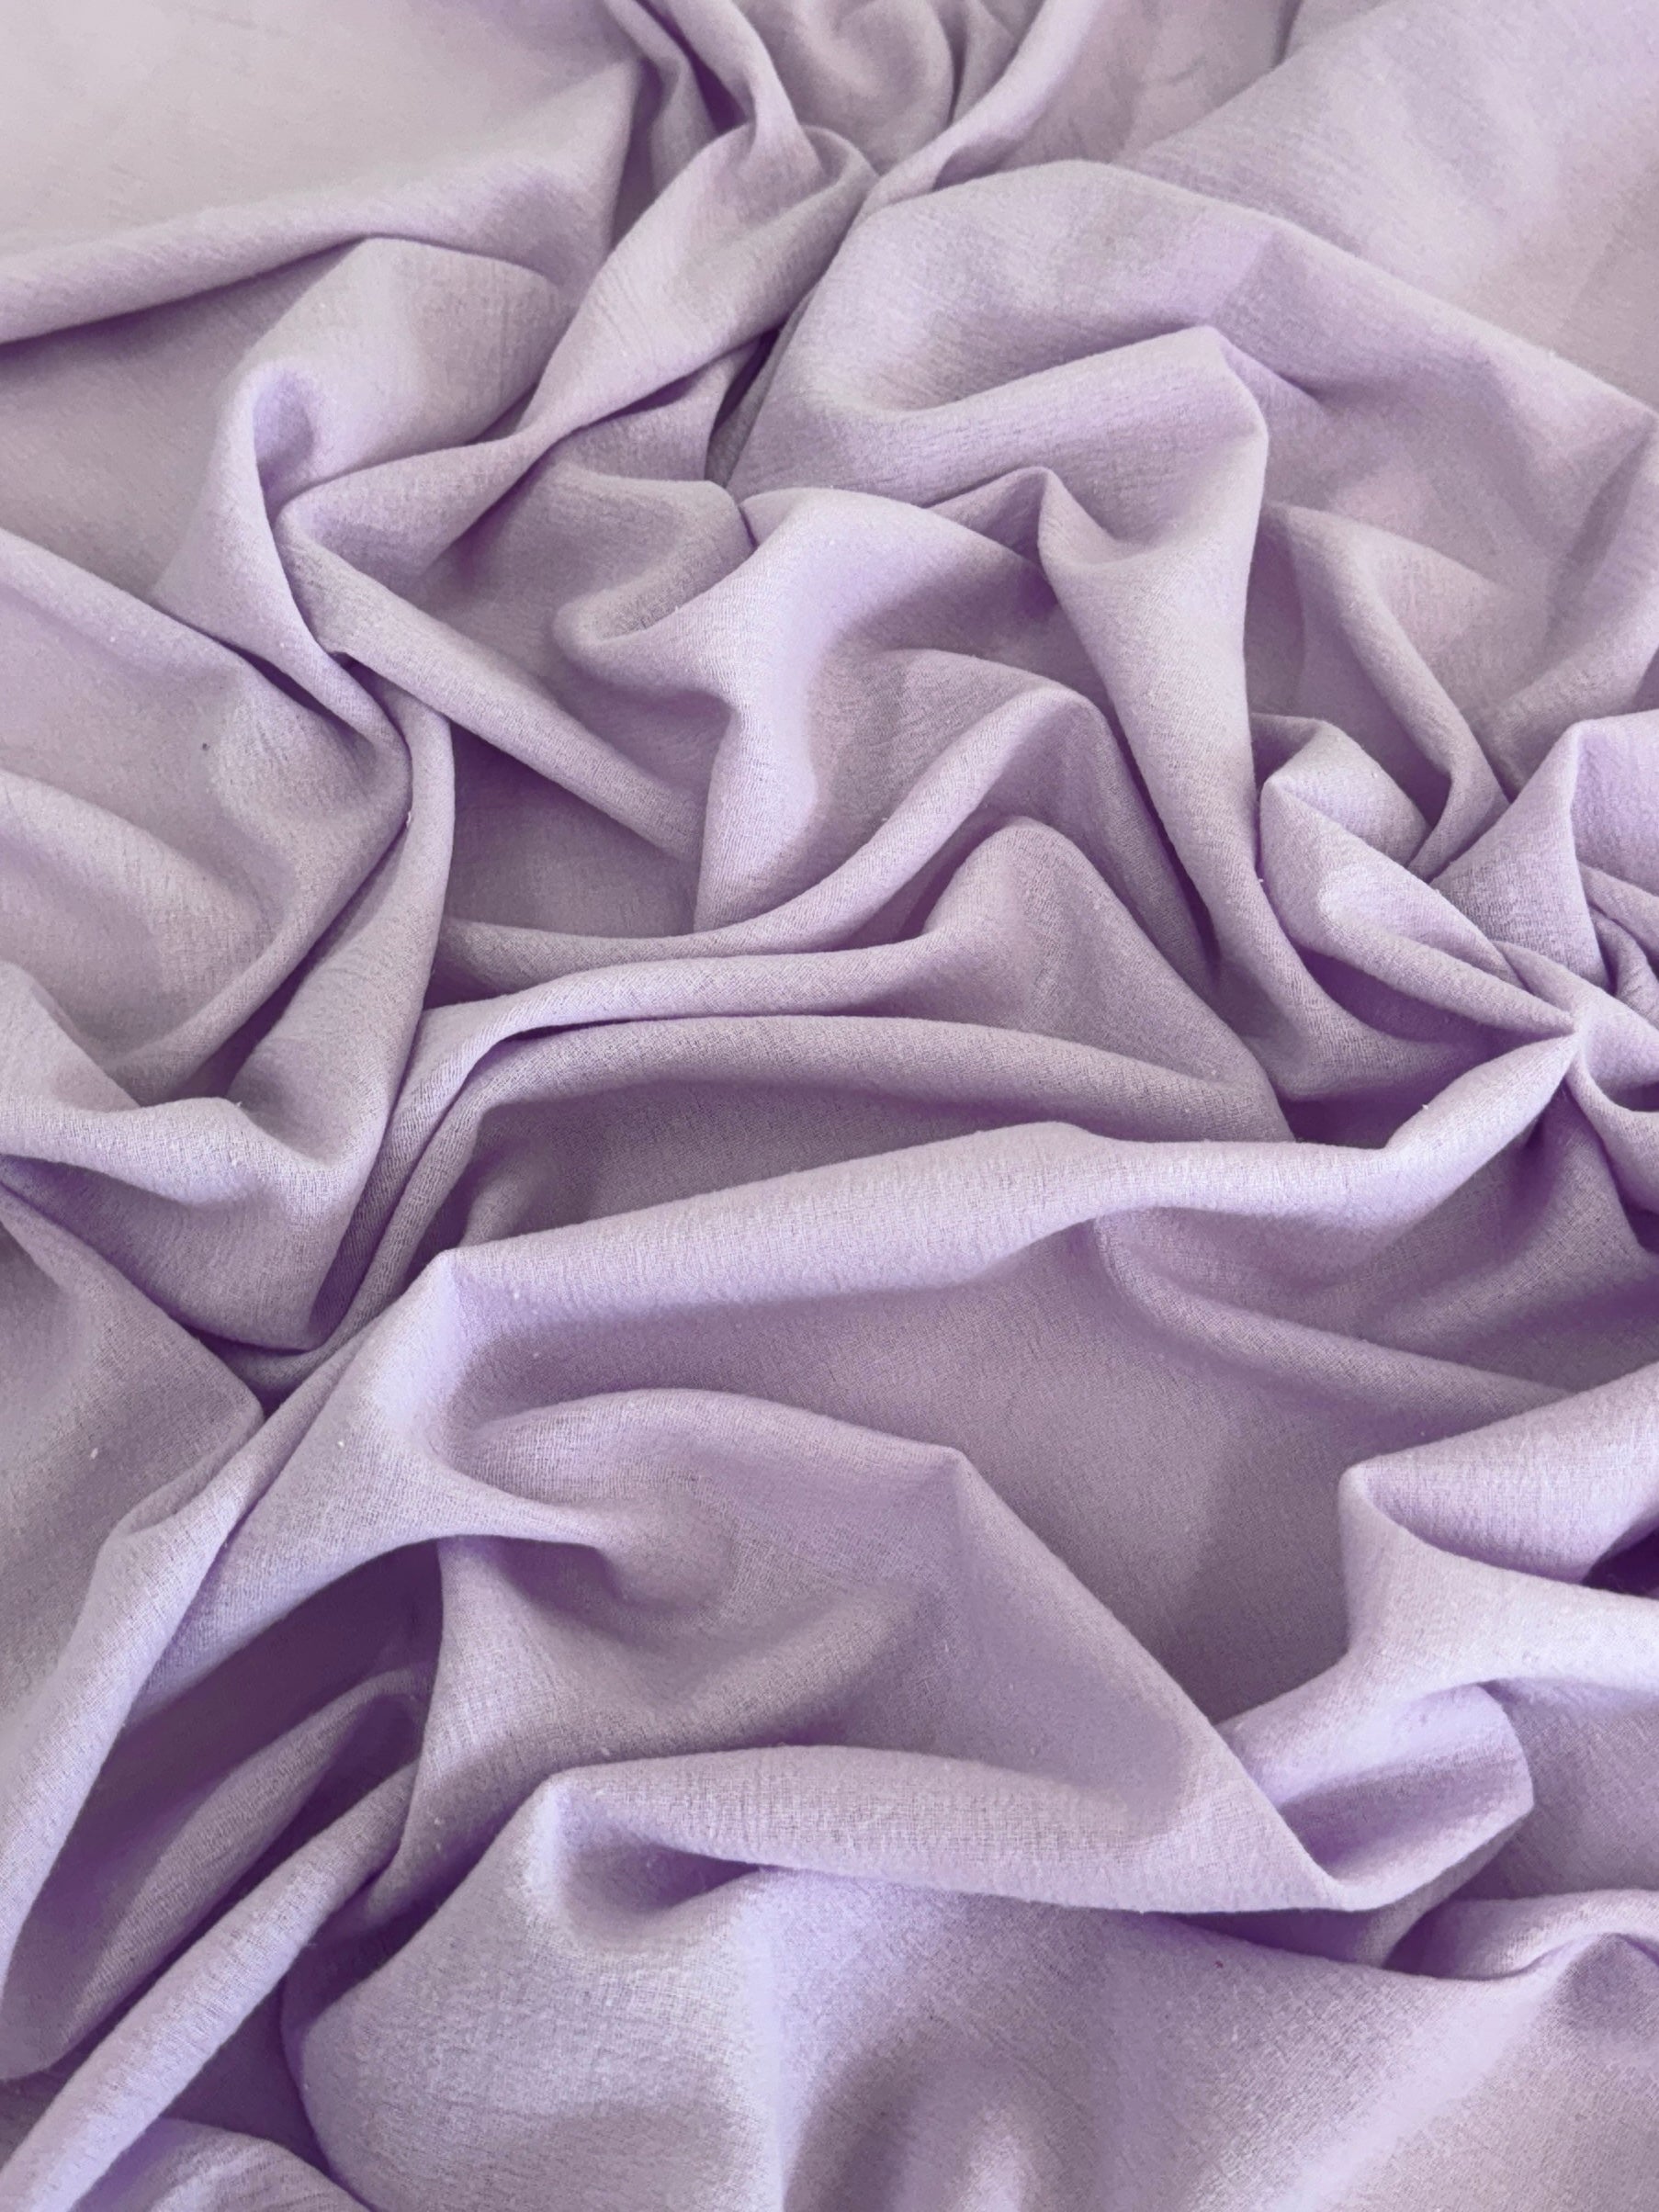 Lilac Cotton Gauze, Lilac Cotton, Organic cotton, Breathable fabric, Lightweight fabric,Fair trade cotton, Cotton yarn, Gauze fabric, Cotton fashion, Tie-dye fabric